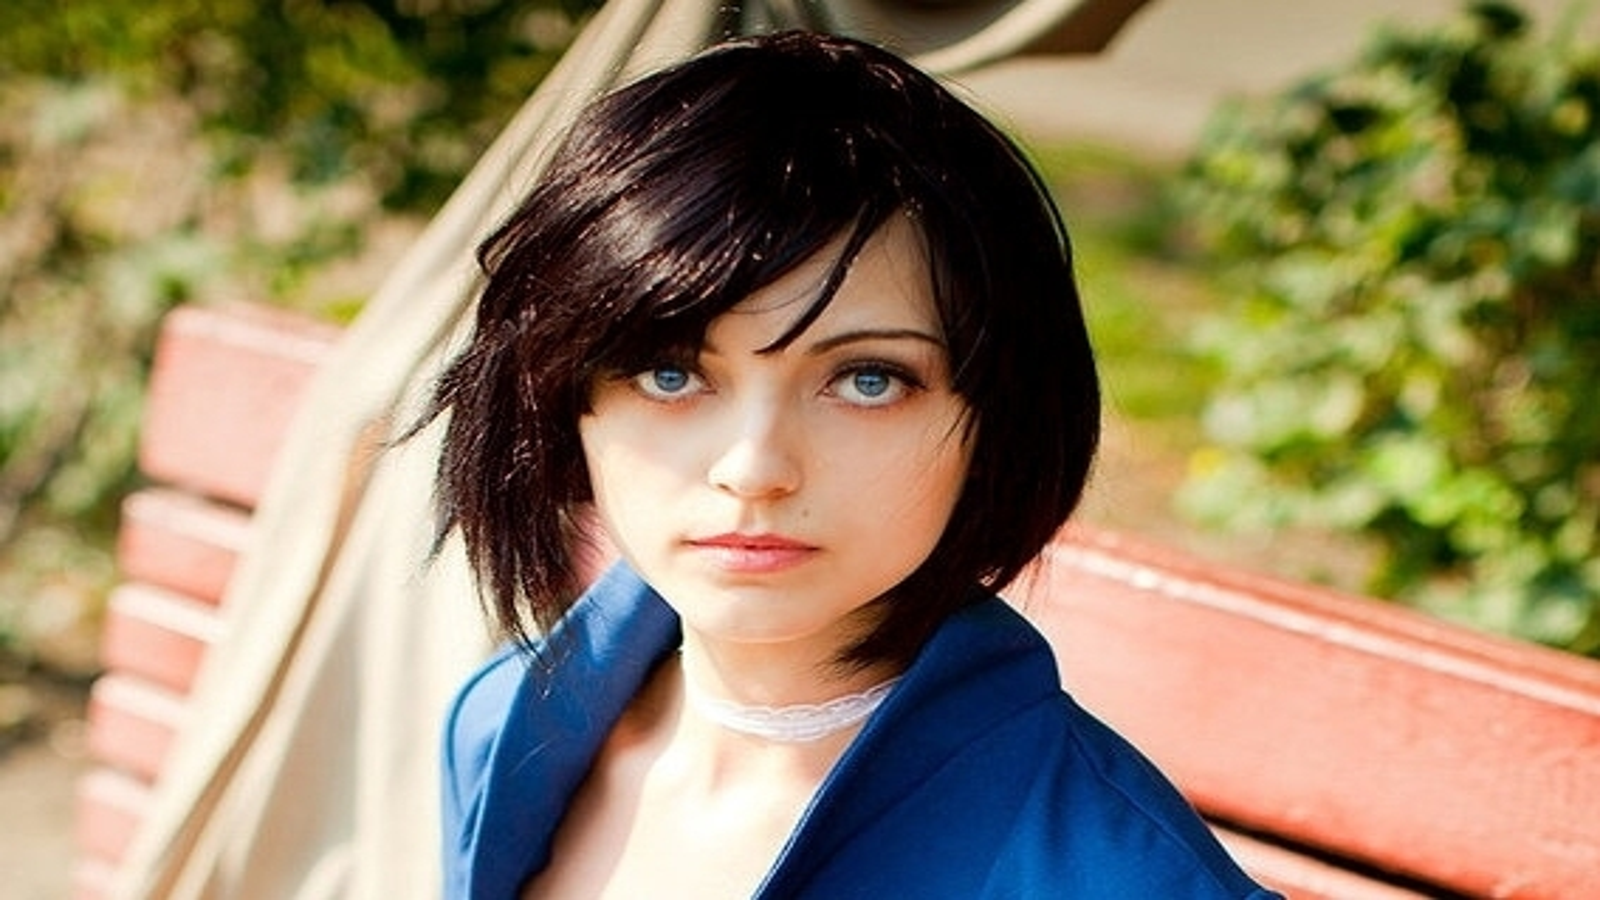 Elizabeth From Bioshock Porn - Irrational Games hires cosplayer to portray BioShock Infinite's Elizabeth  on boxart, in ads | Eurogamer.net